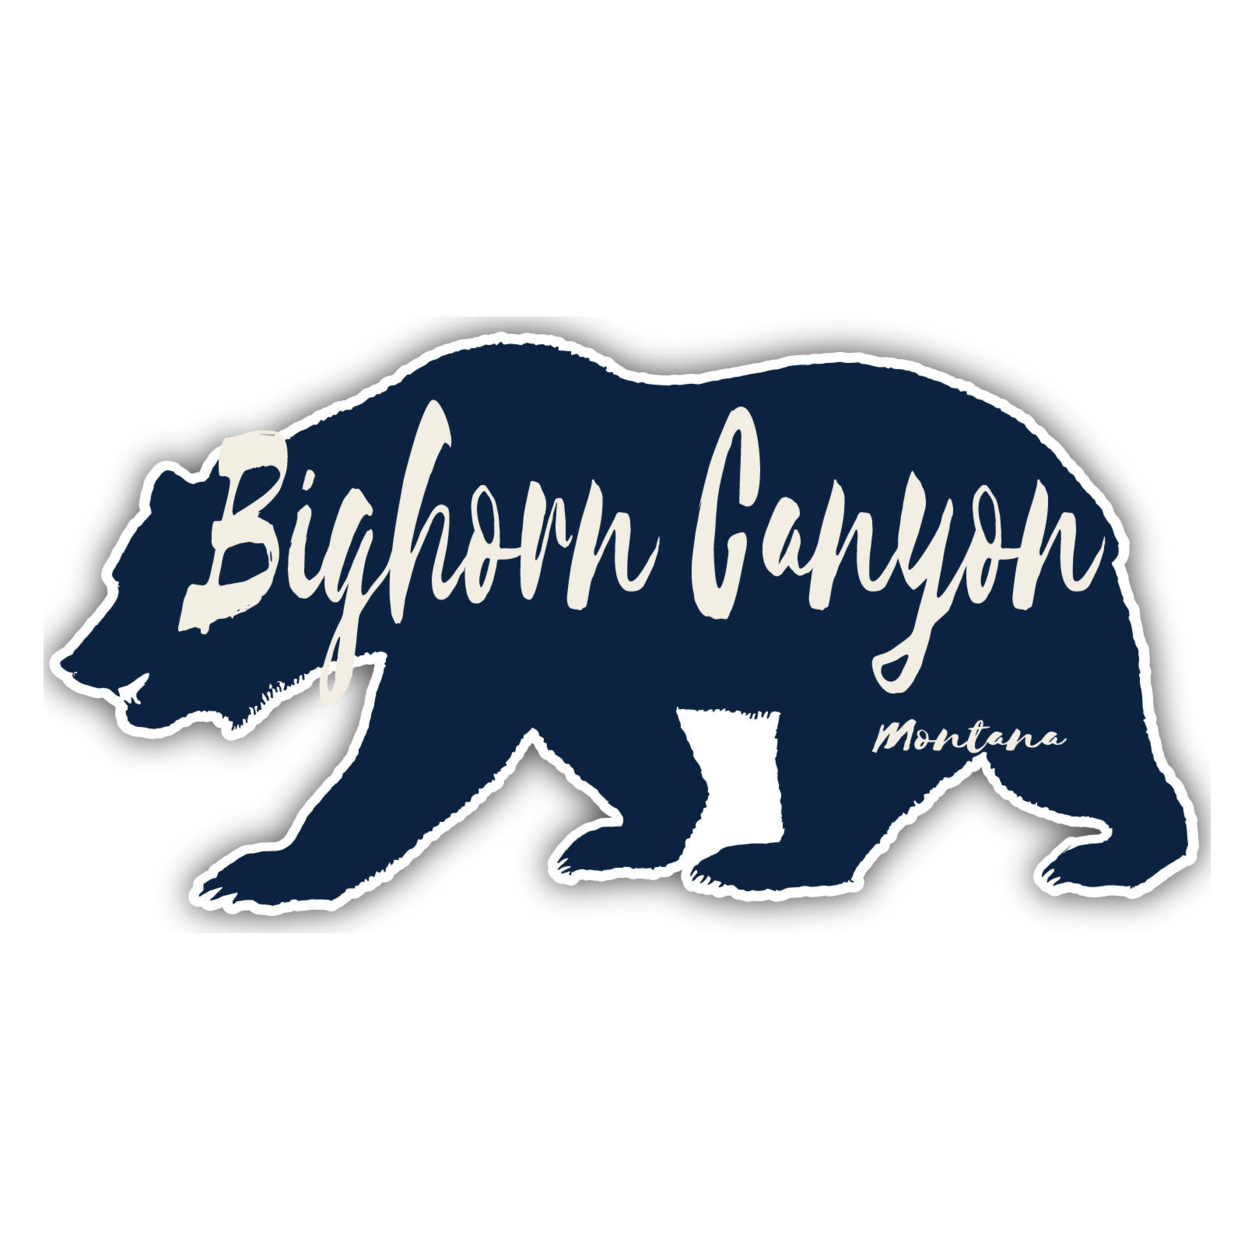 Bighorn Canyon Montana Souvenir Decorative Stickers (Choose Theme And Size) - Single Unit, 4-Inch, Bear